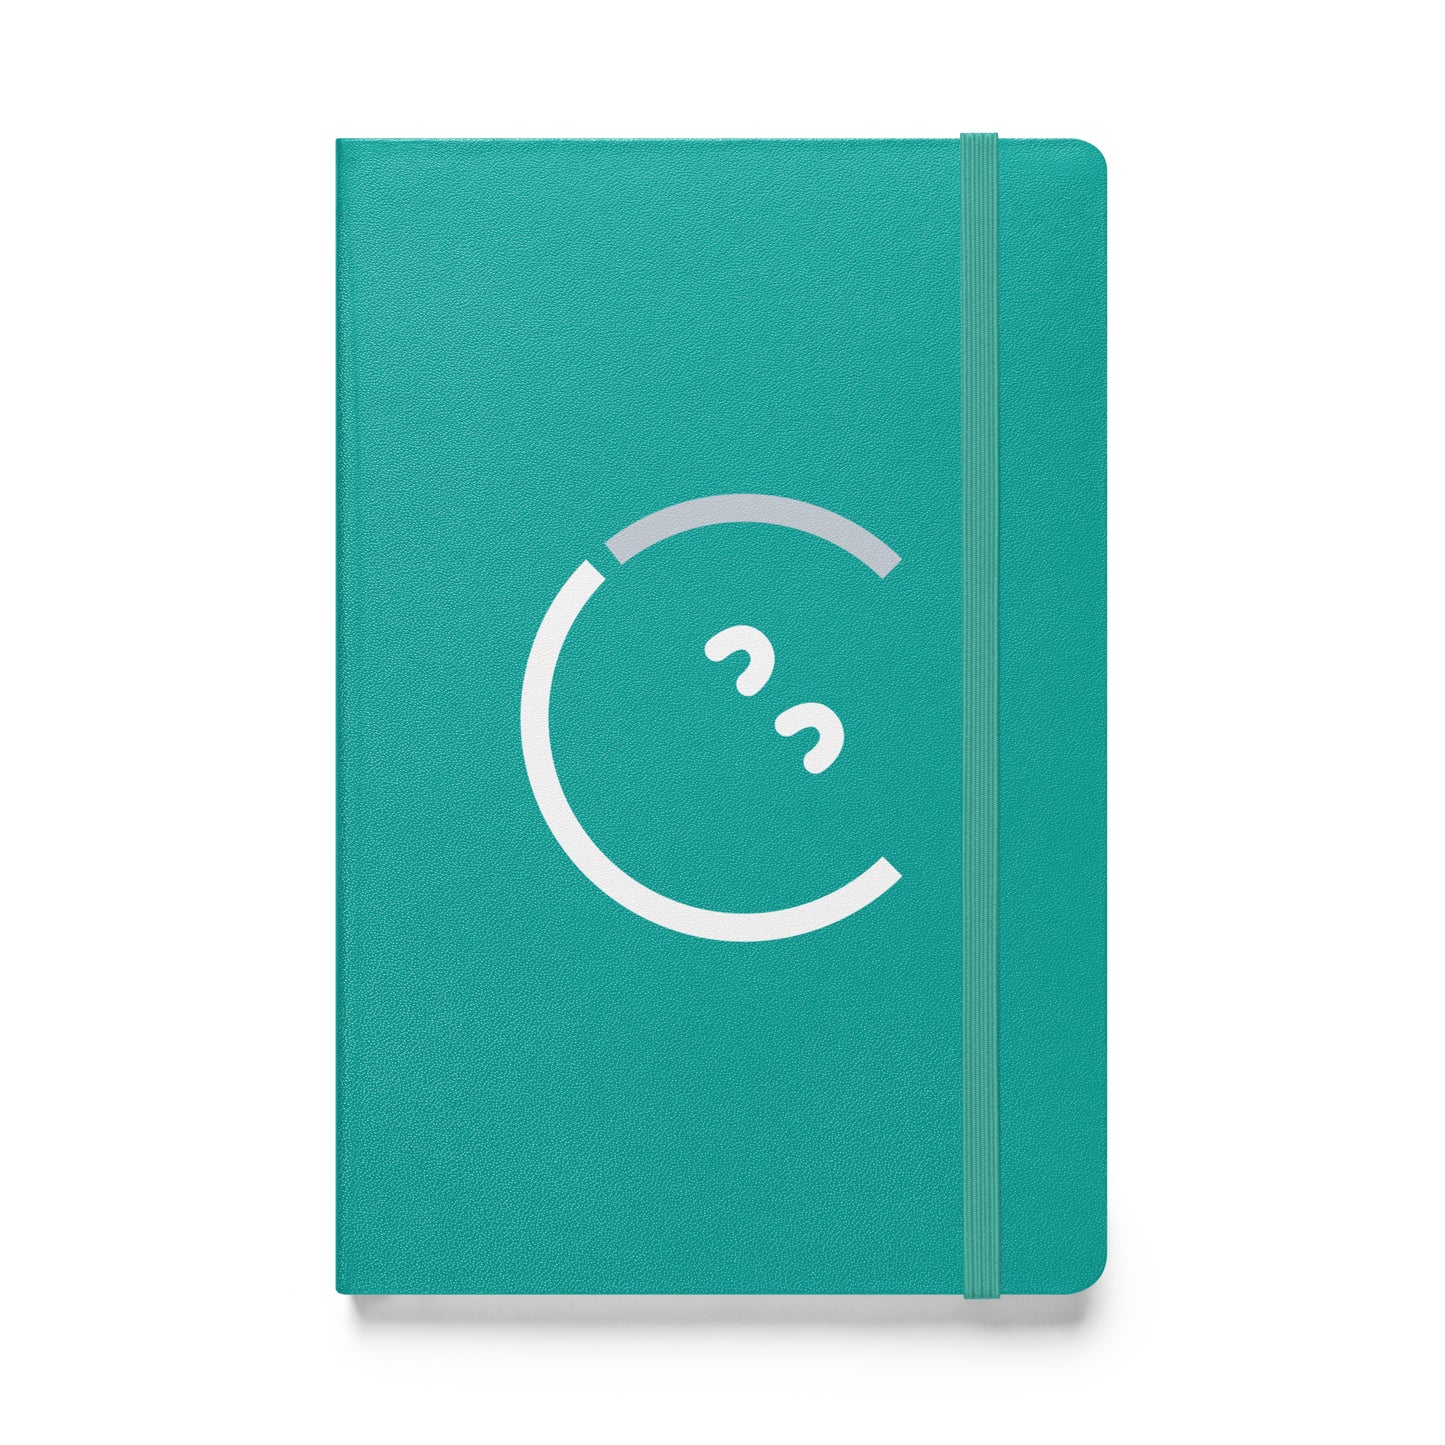 Cuhckle - Hardcover bound notebook